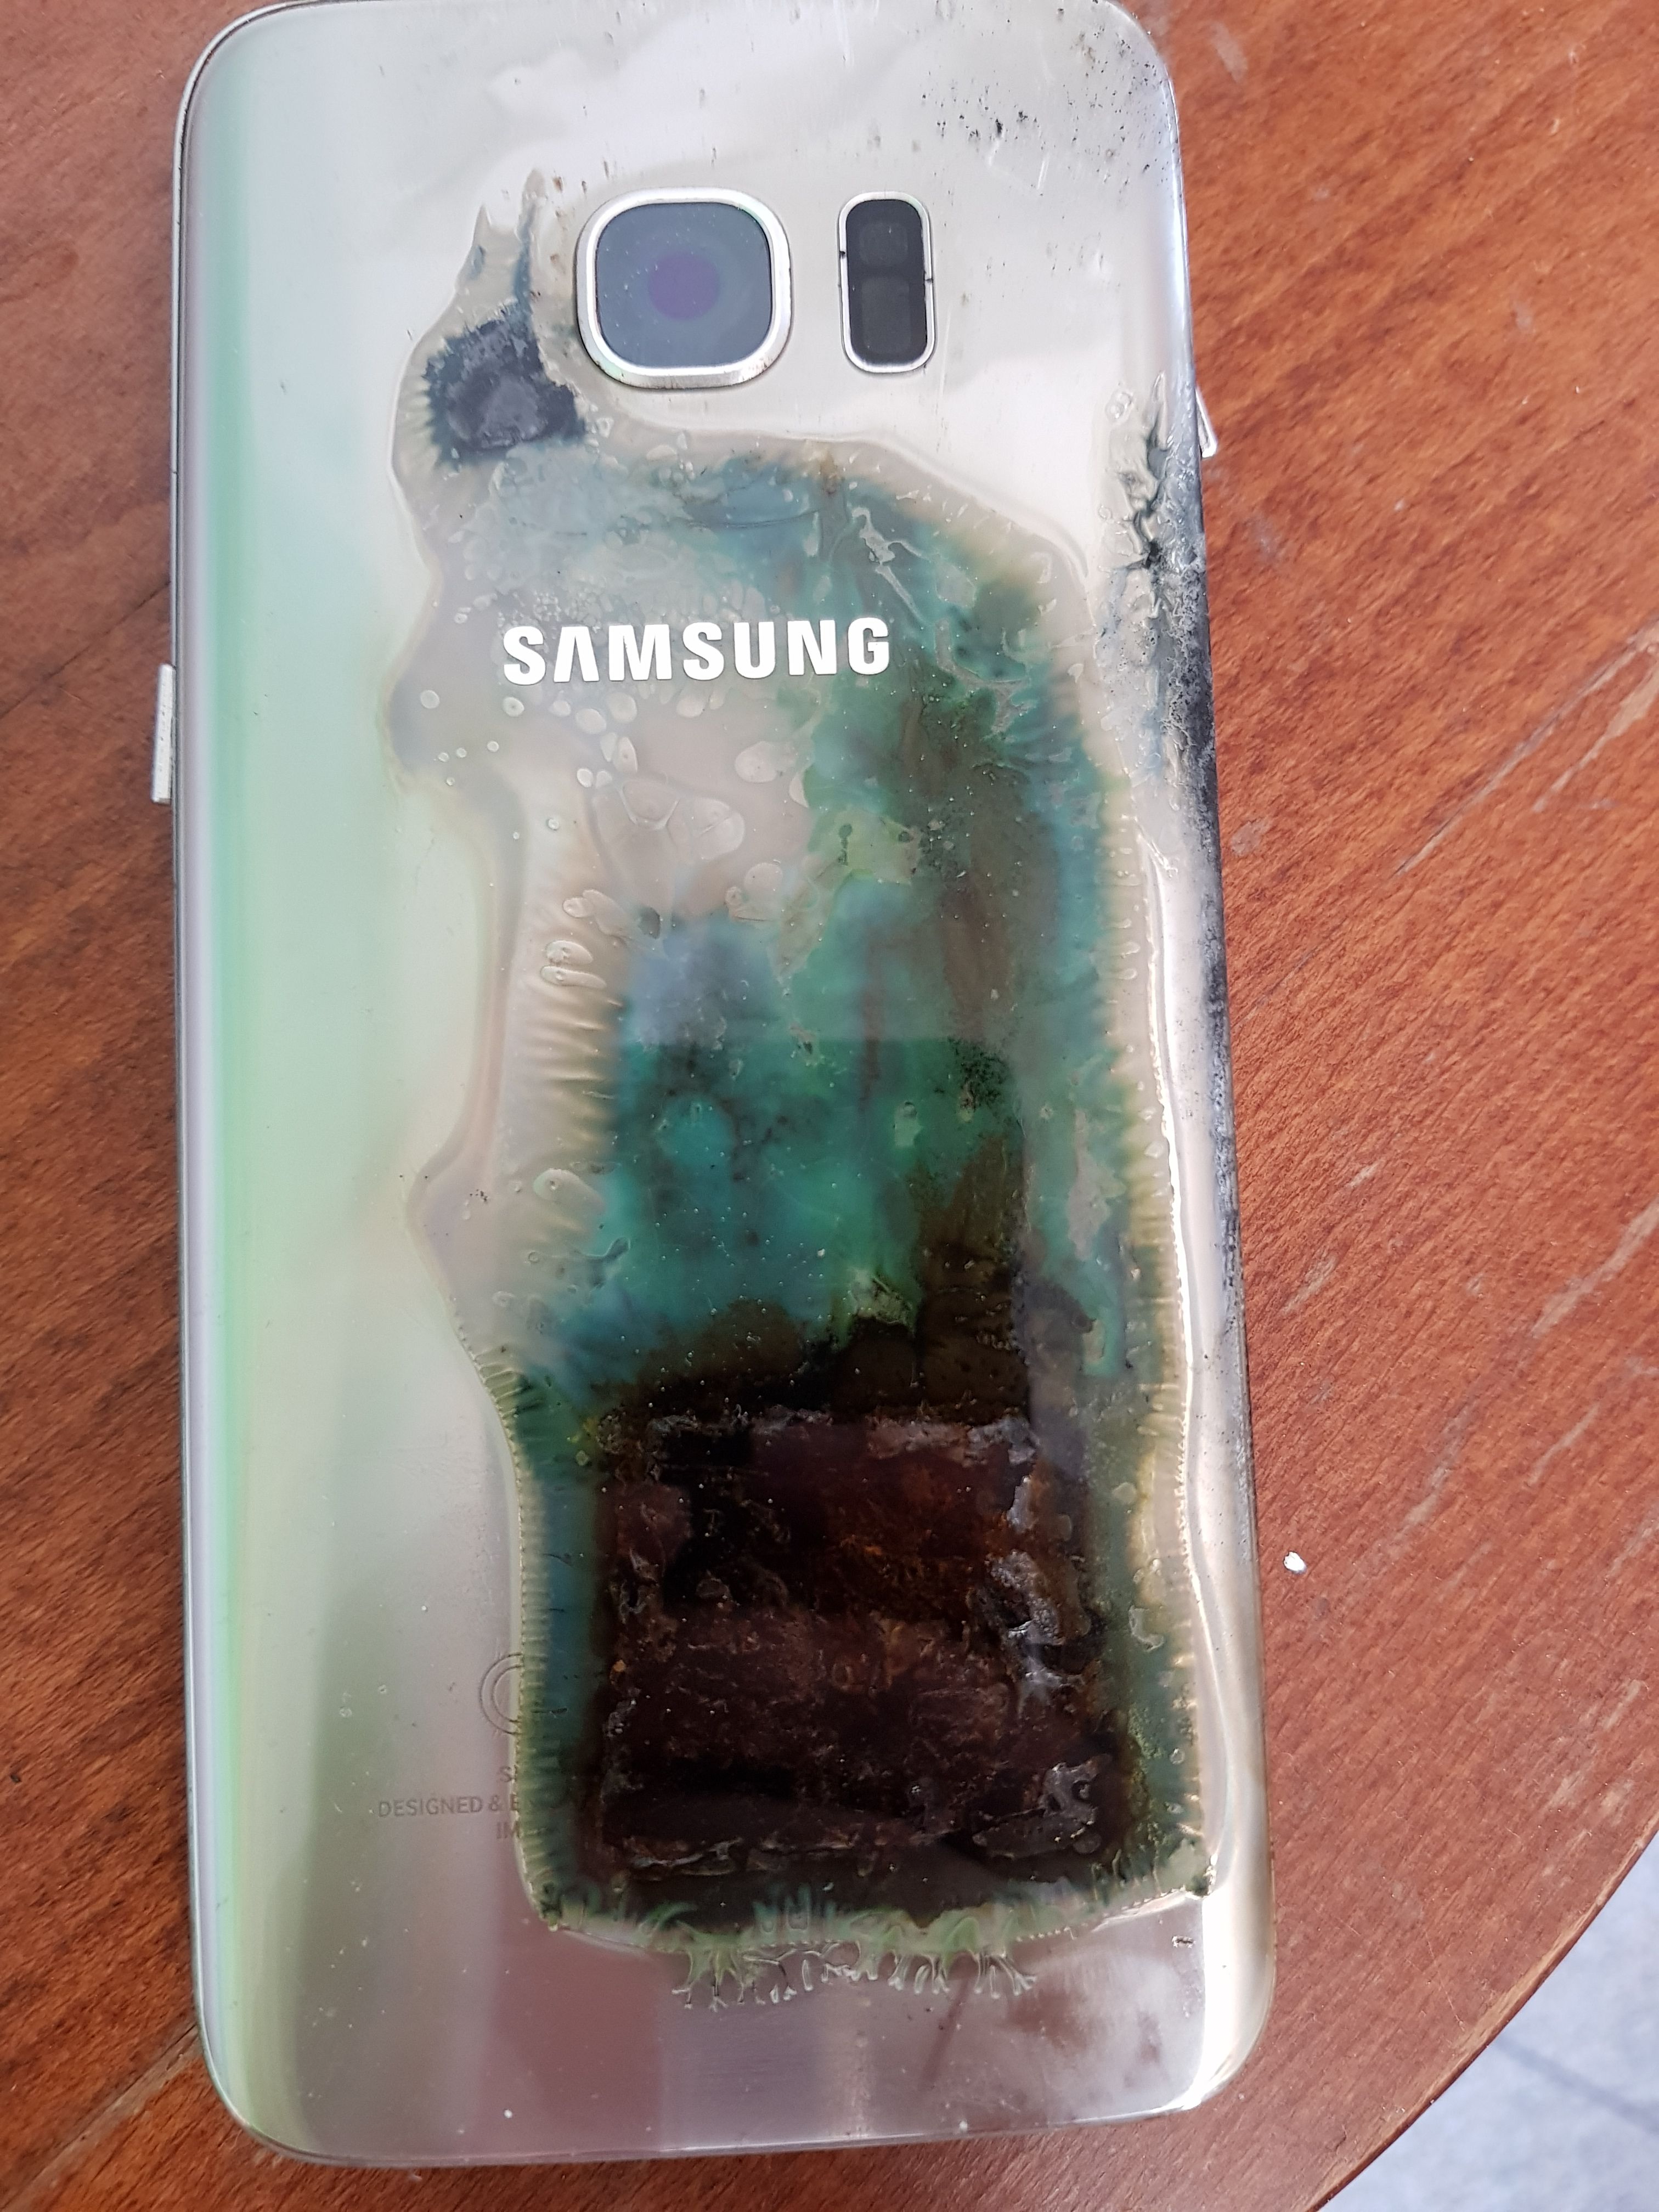 Samsung Galaxy S7 edge batteria esplosa - Samsung Community